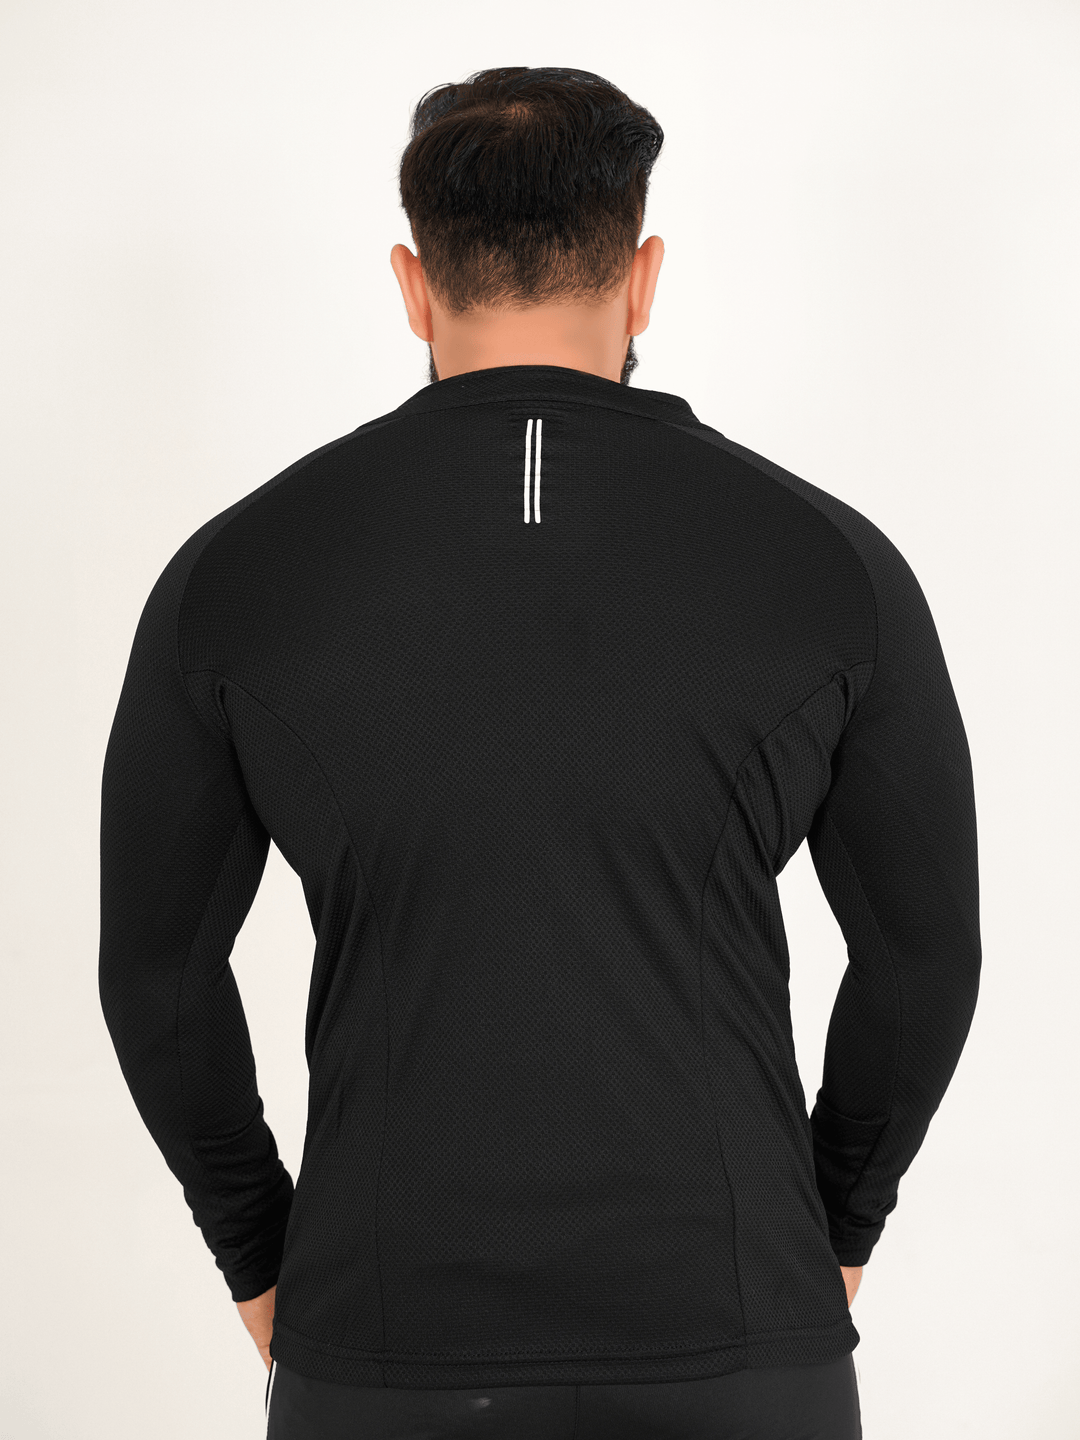 FlexFit Urban Jacket - Black - GYMRUN Activewear